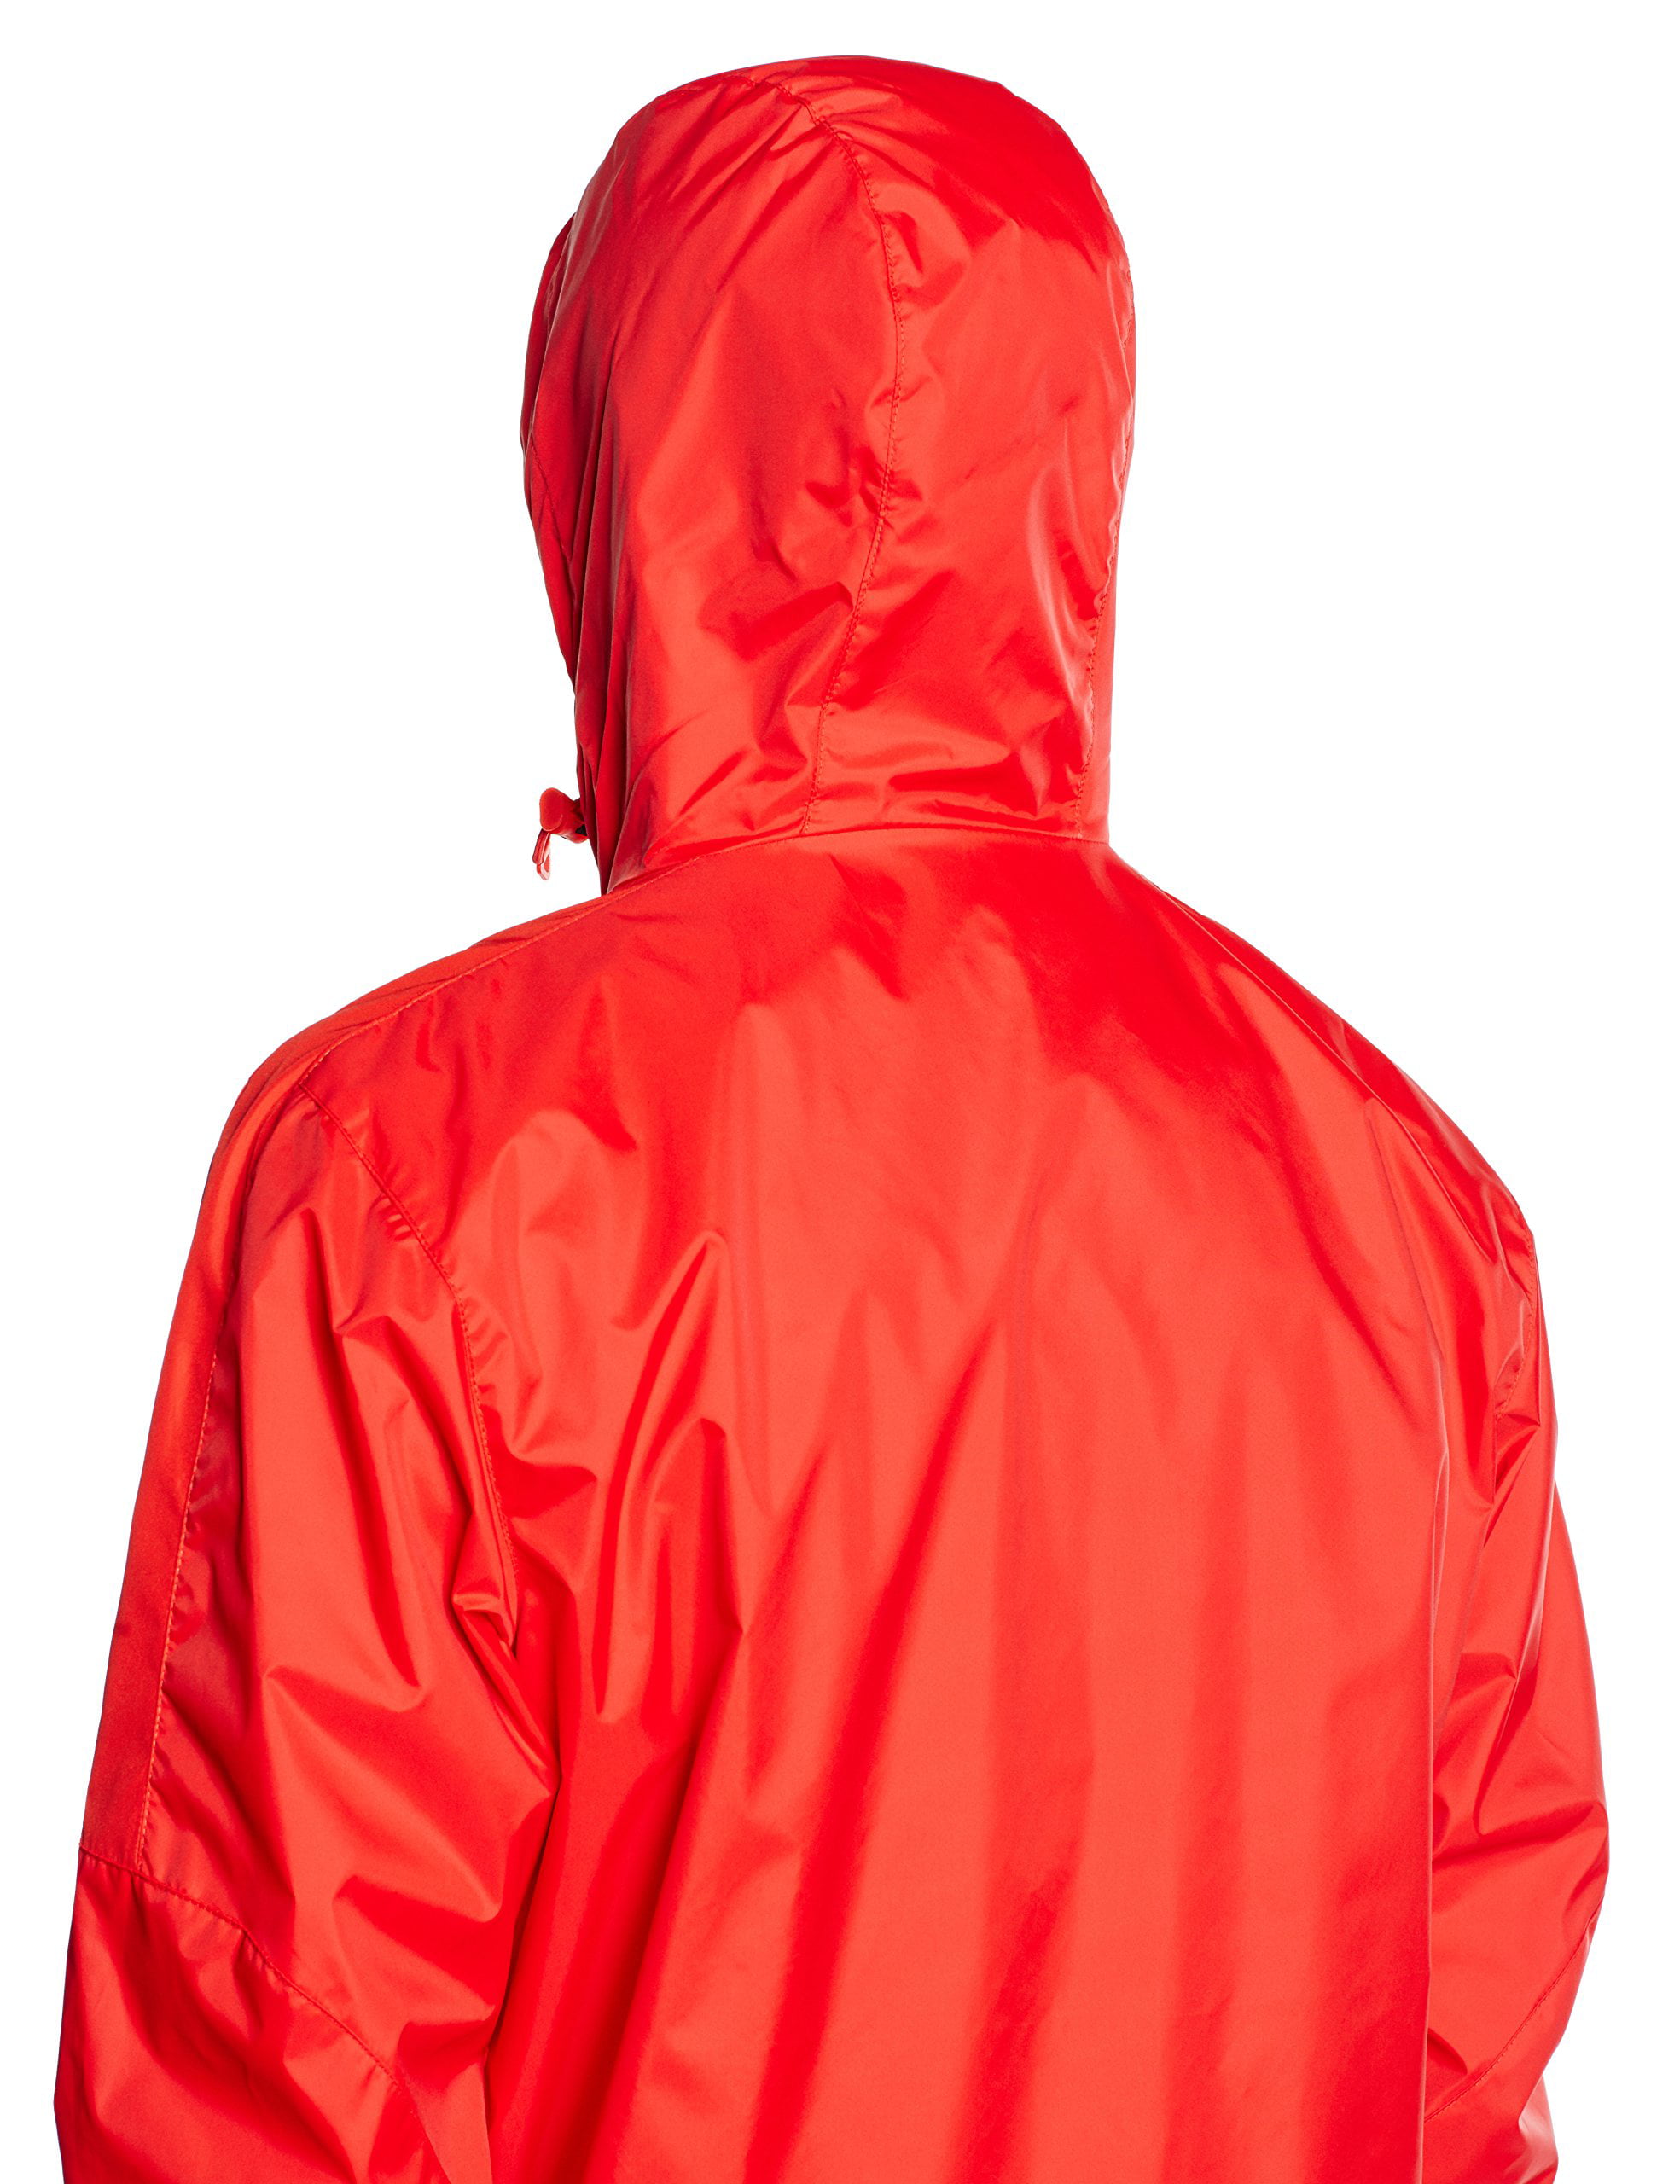 Nike Men's Sideline Rain 657 (Red, Medium) Walmart.com